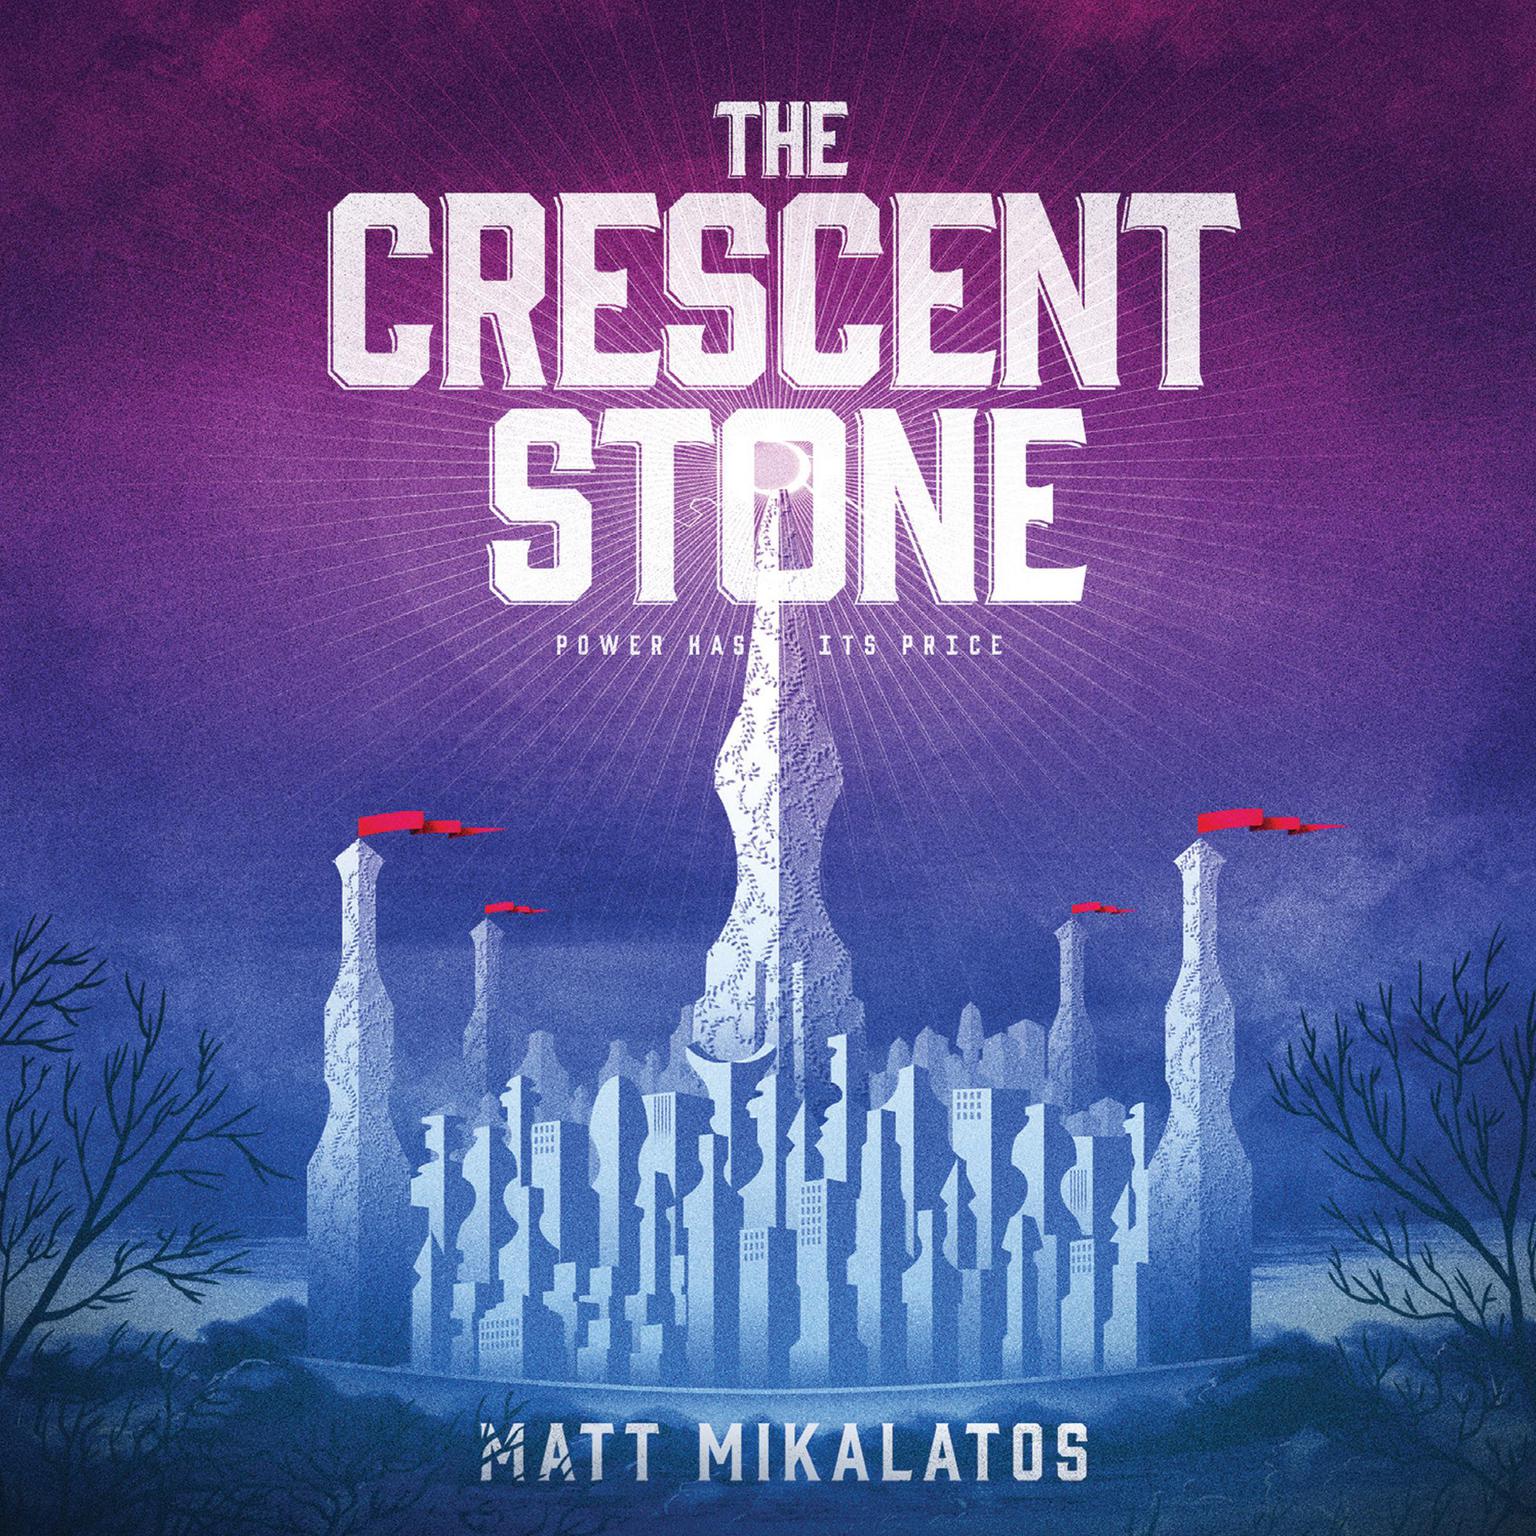 The Crescent Stone Audiobook, by Matt Mikalatos